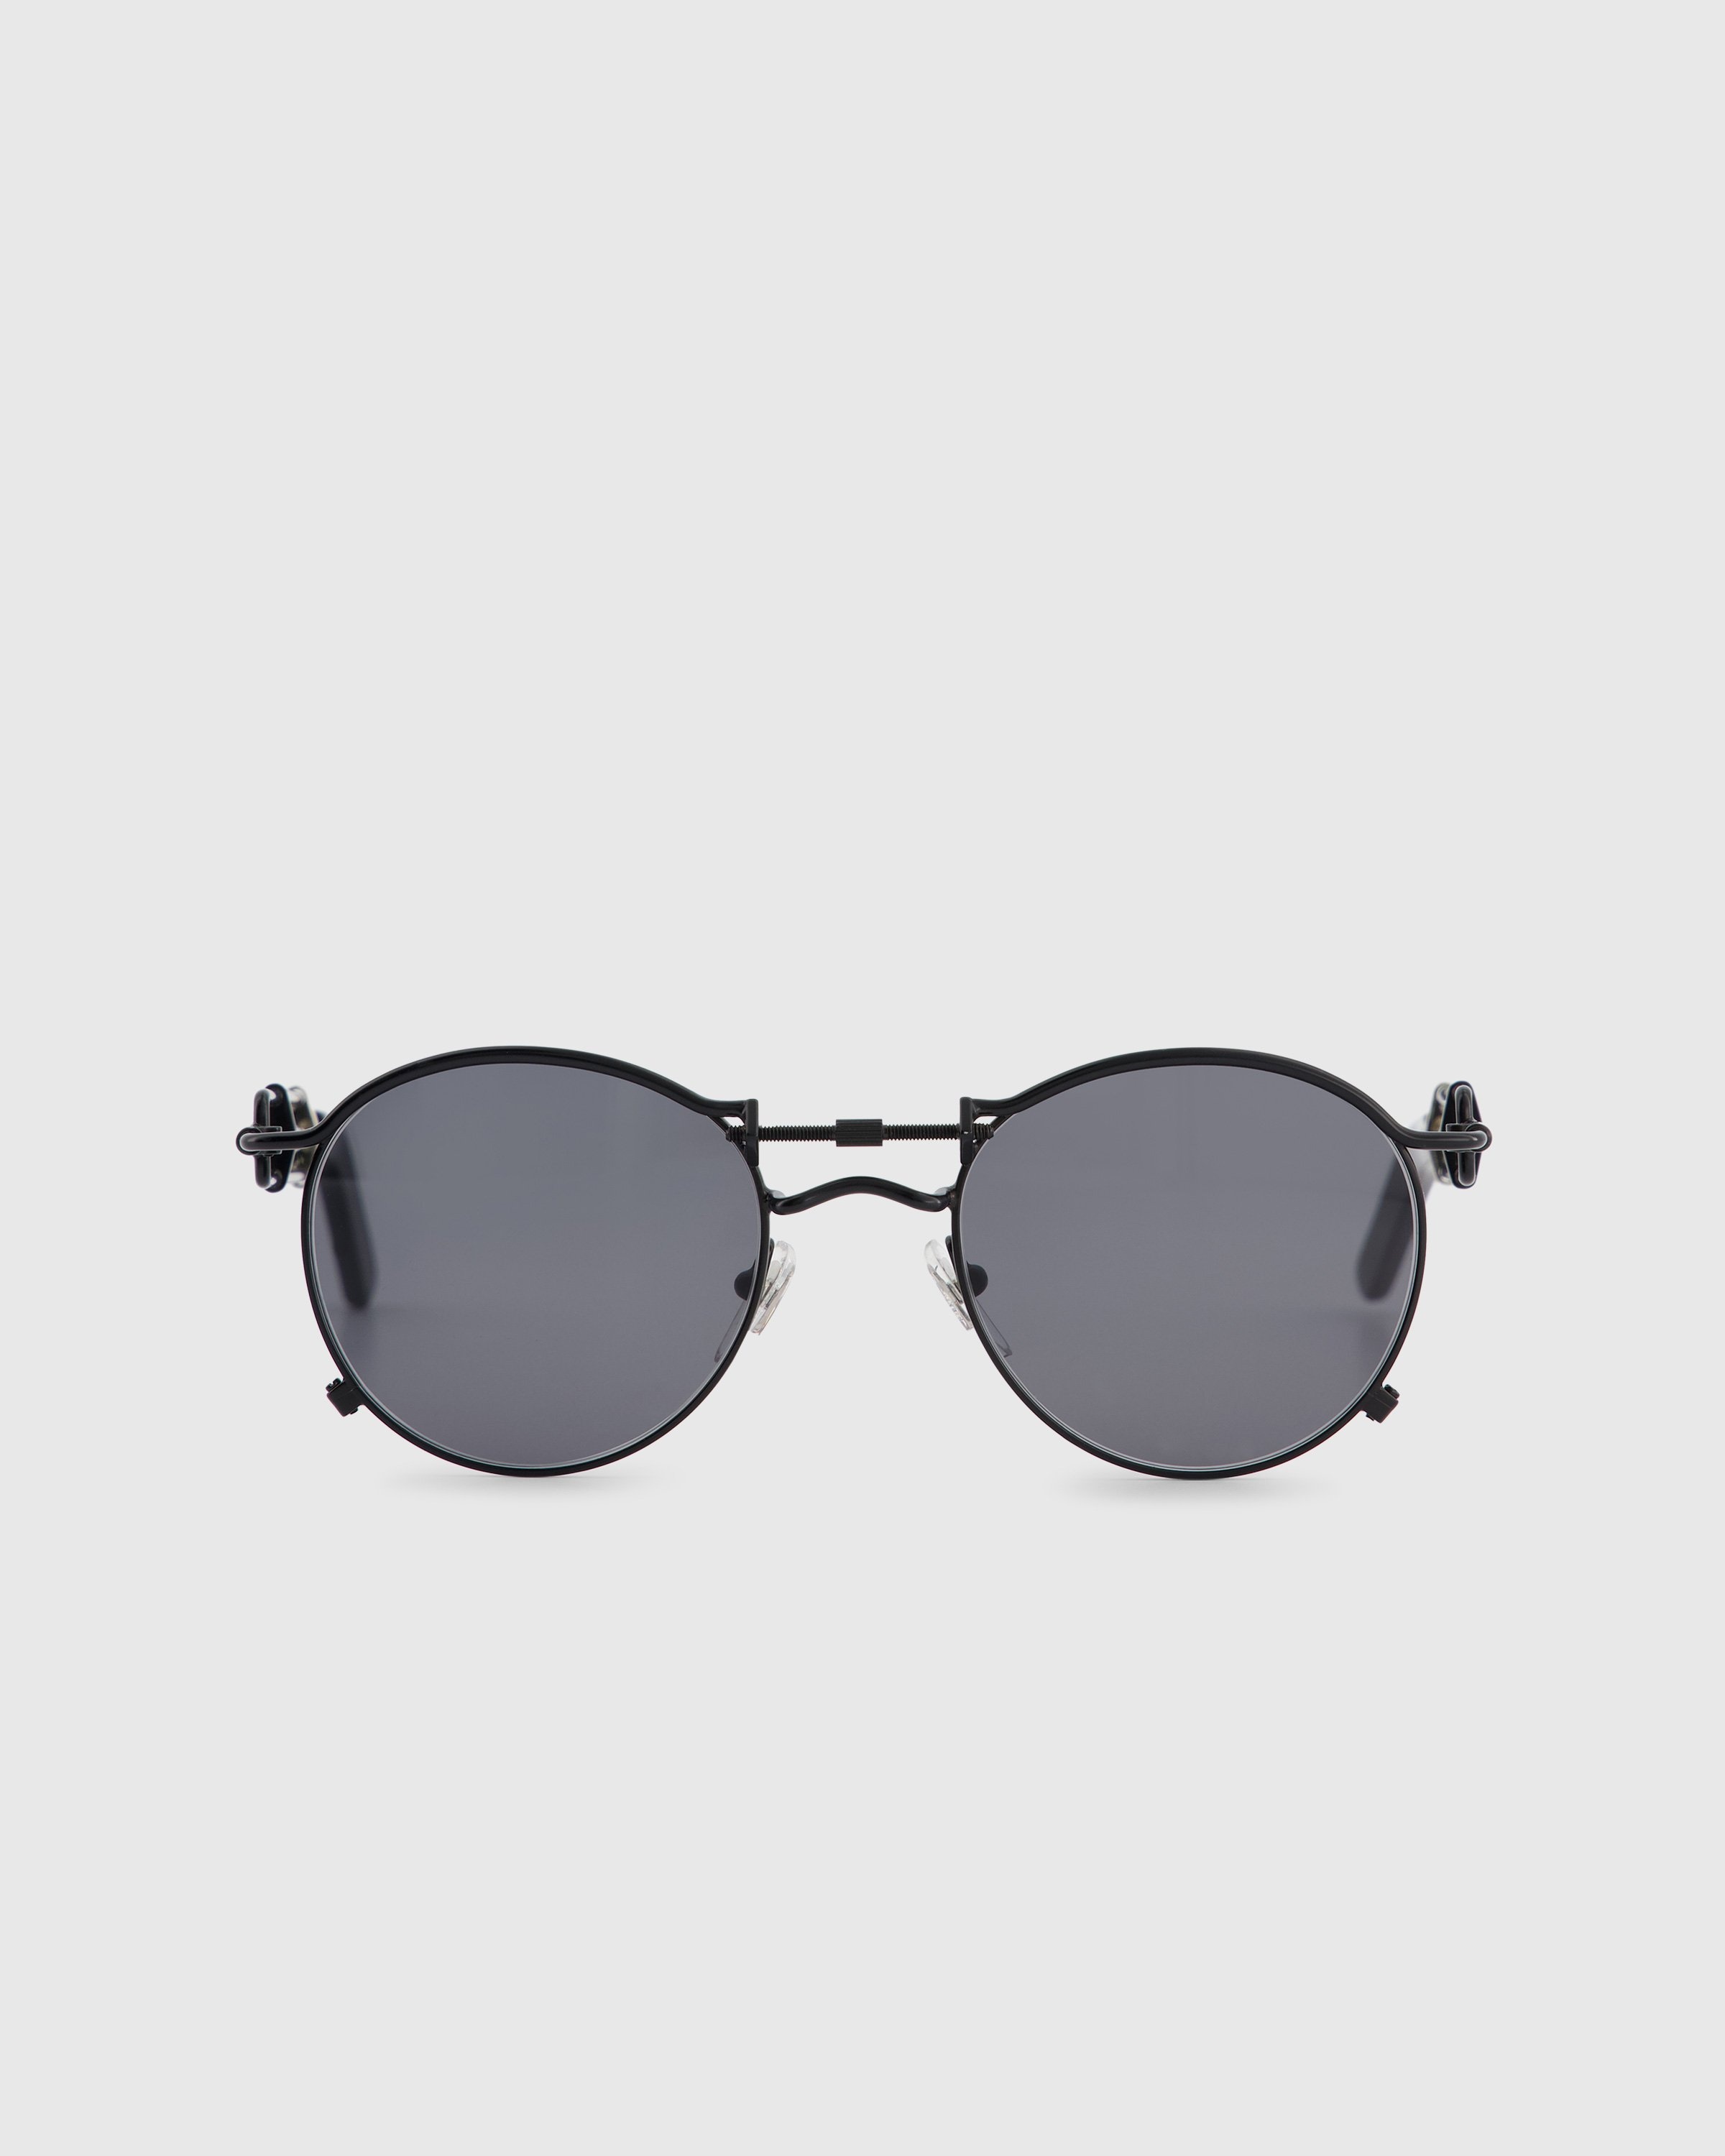 Jean Paul Gaultier x Burna Boy – 56-0174 Pas De Vis Sunglasses Black - Eyewear - Black - Image 1